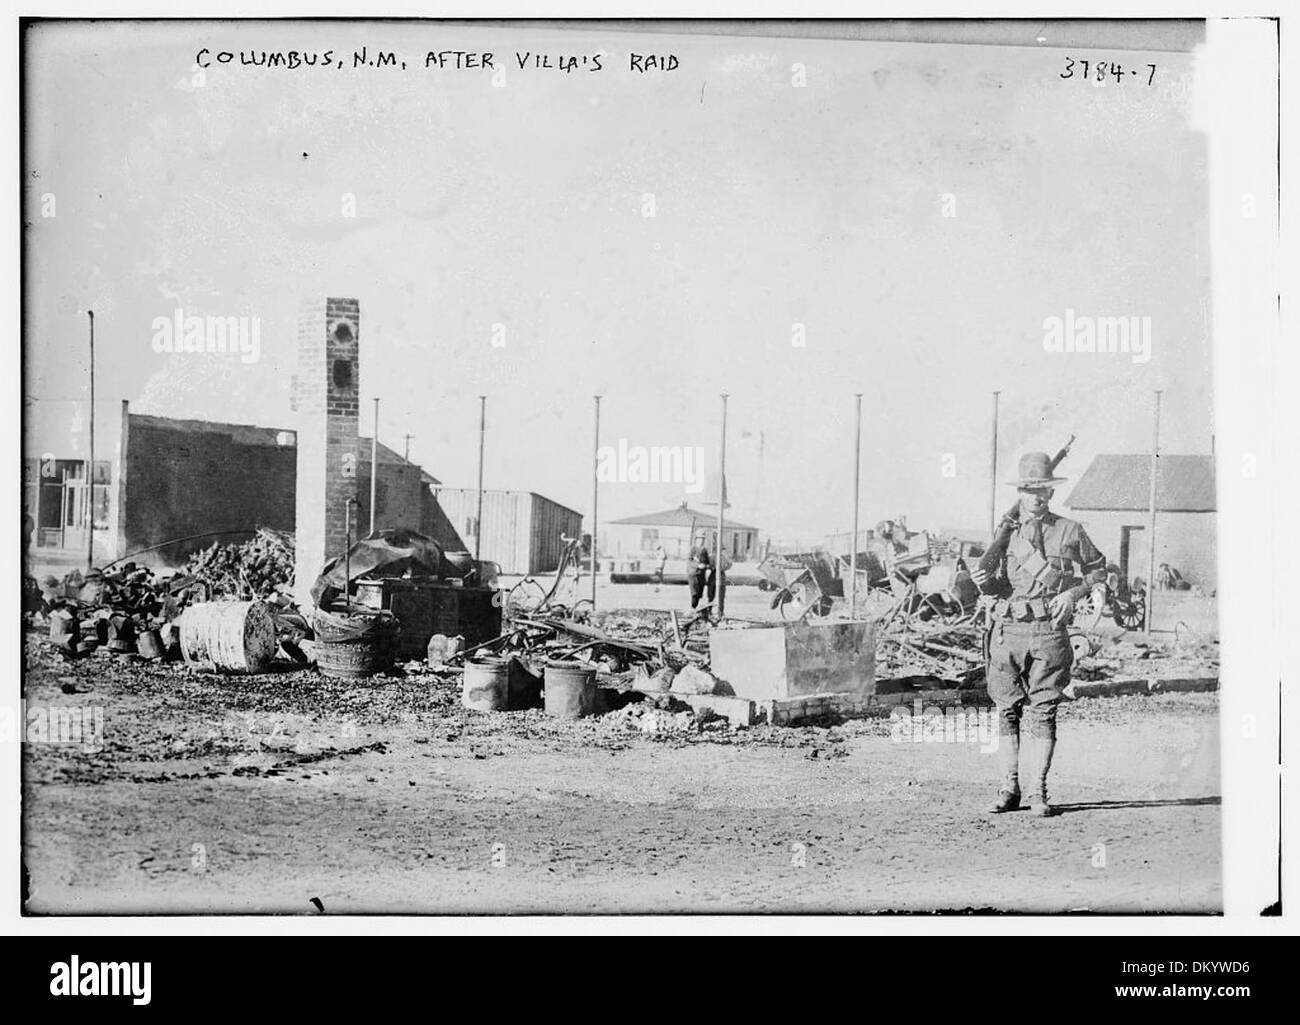 Columbus, N.M. dopo Villa di raid (LOC) Foto Stock